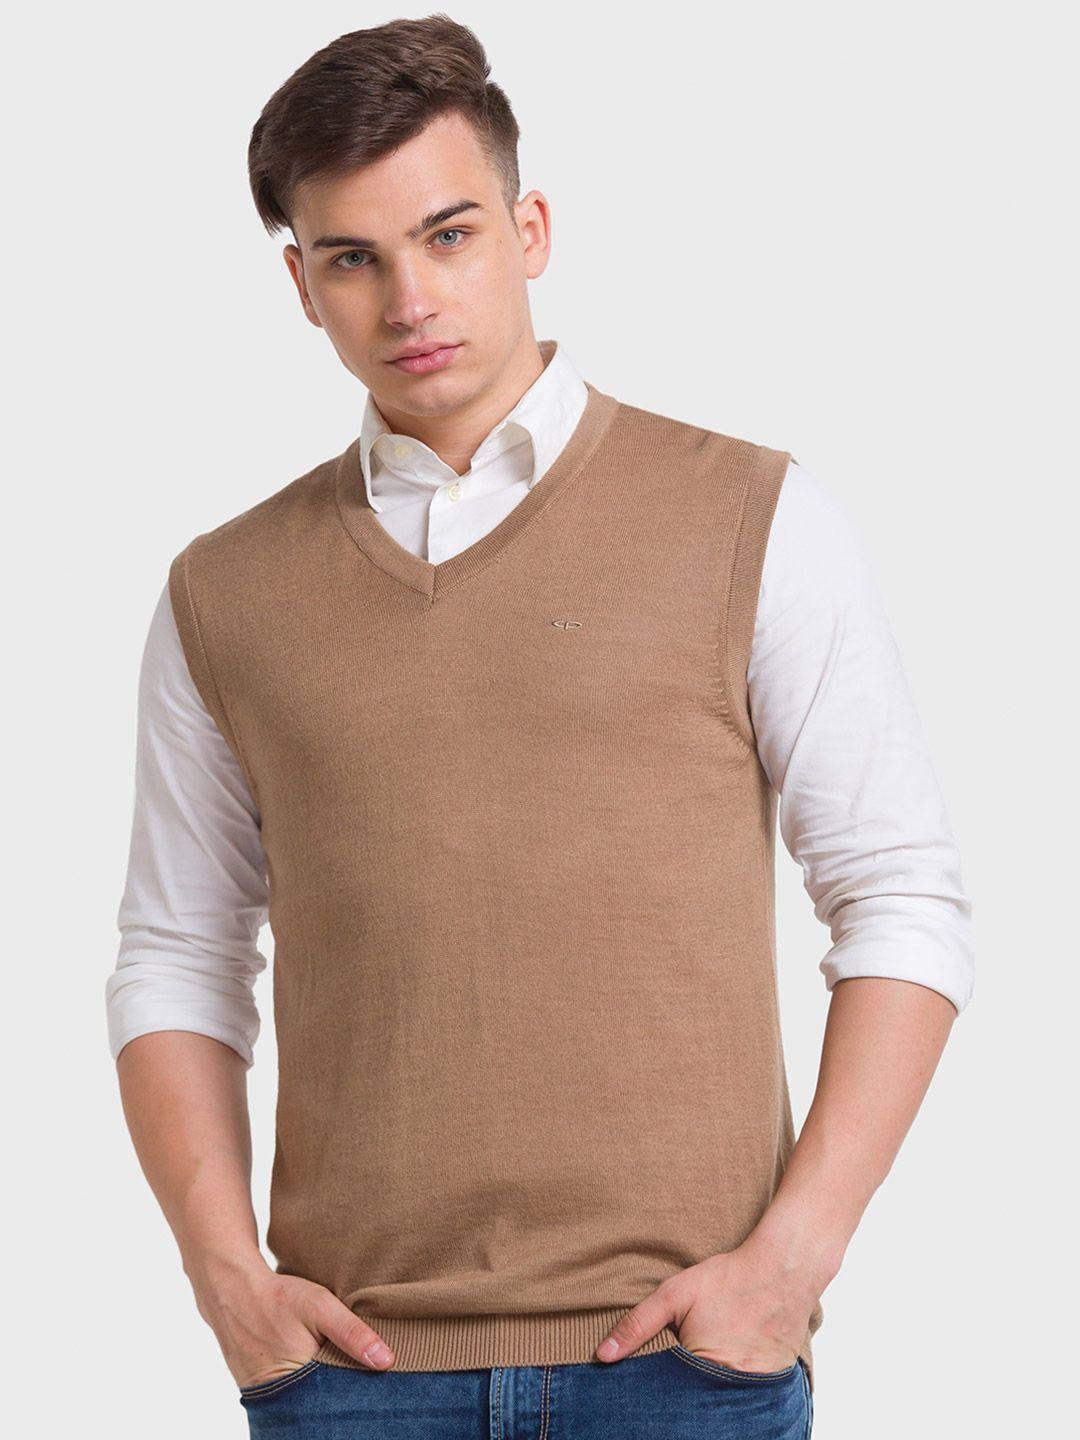 colorplus men plus size v neck sleeveless sweater